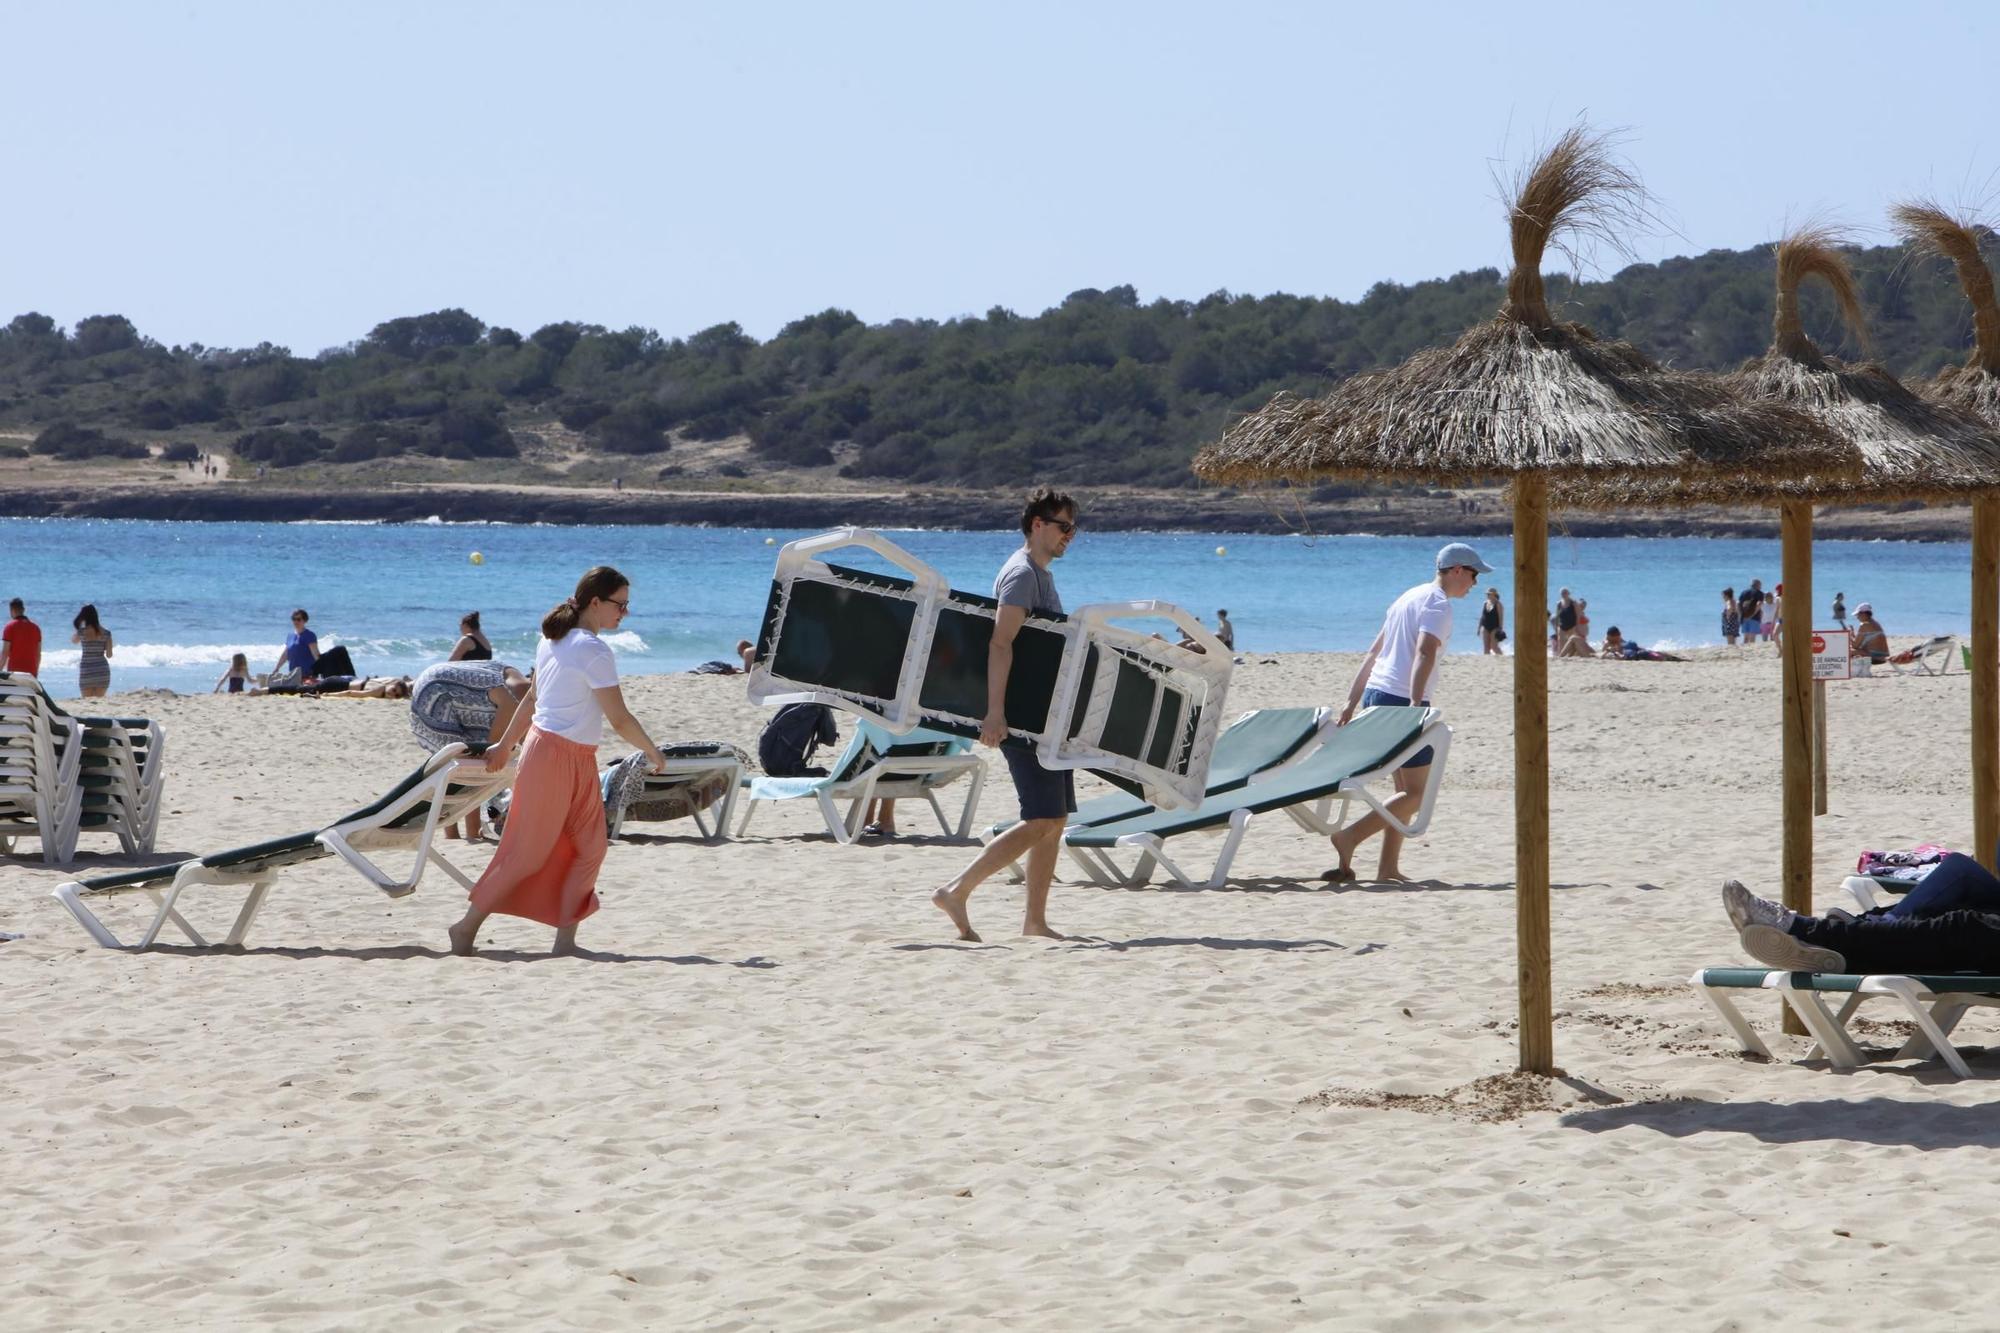 Frühlingsgefühle auf Mallorca – so sieht es gerade in Cala Millor aus